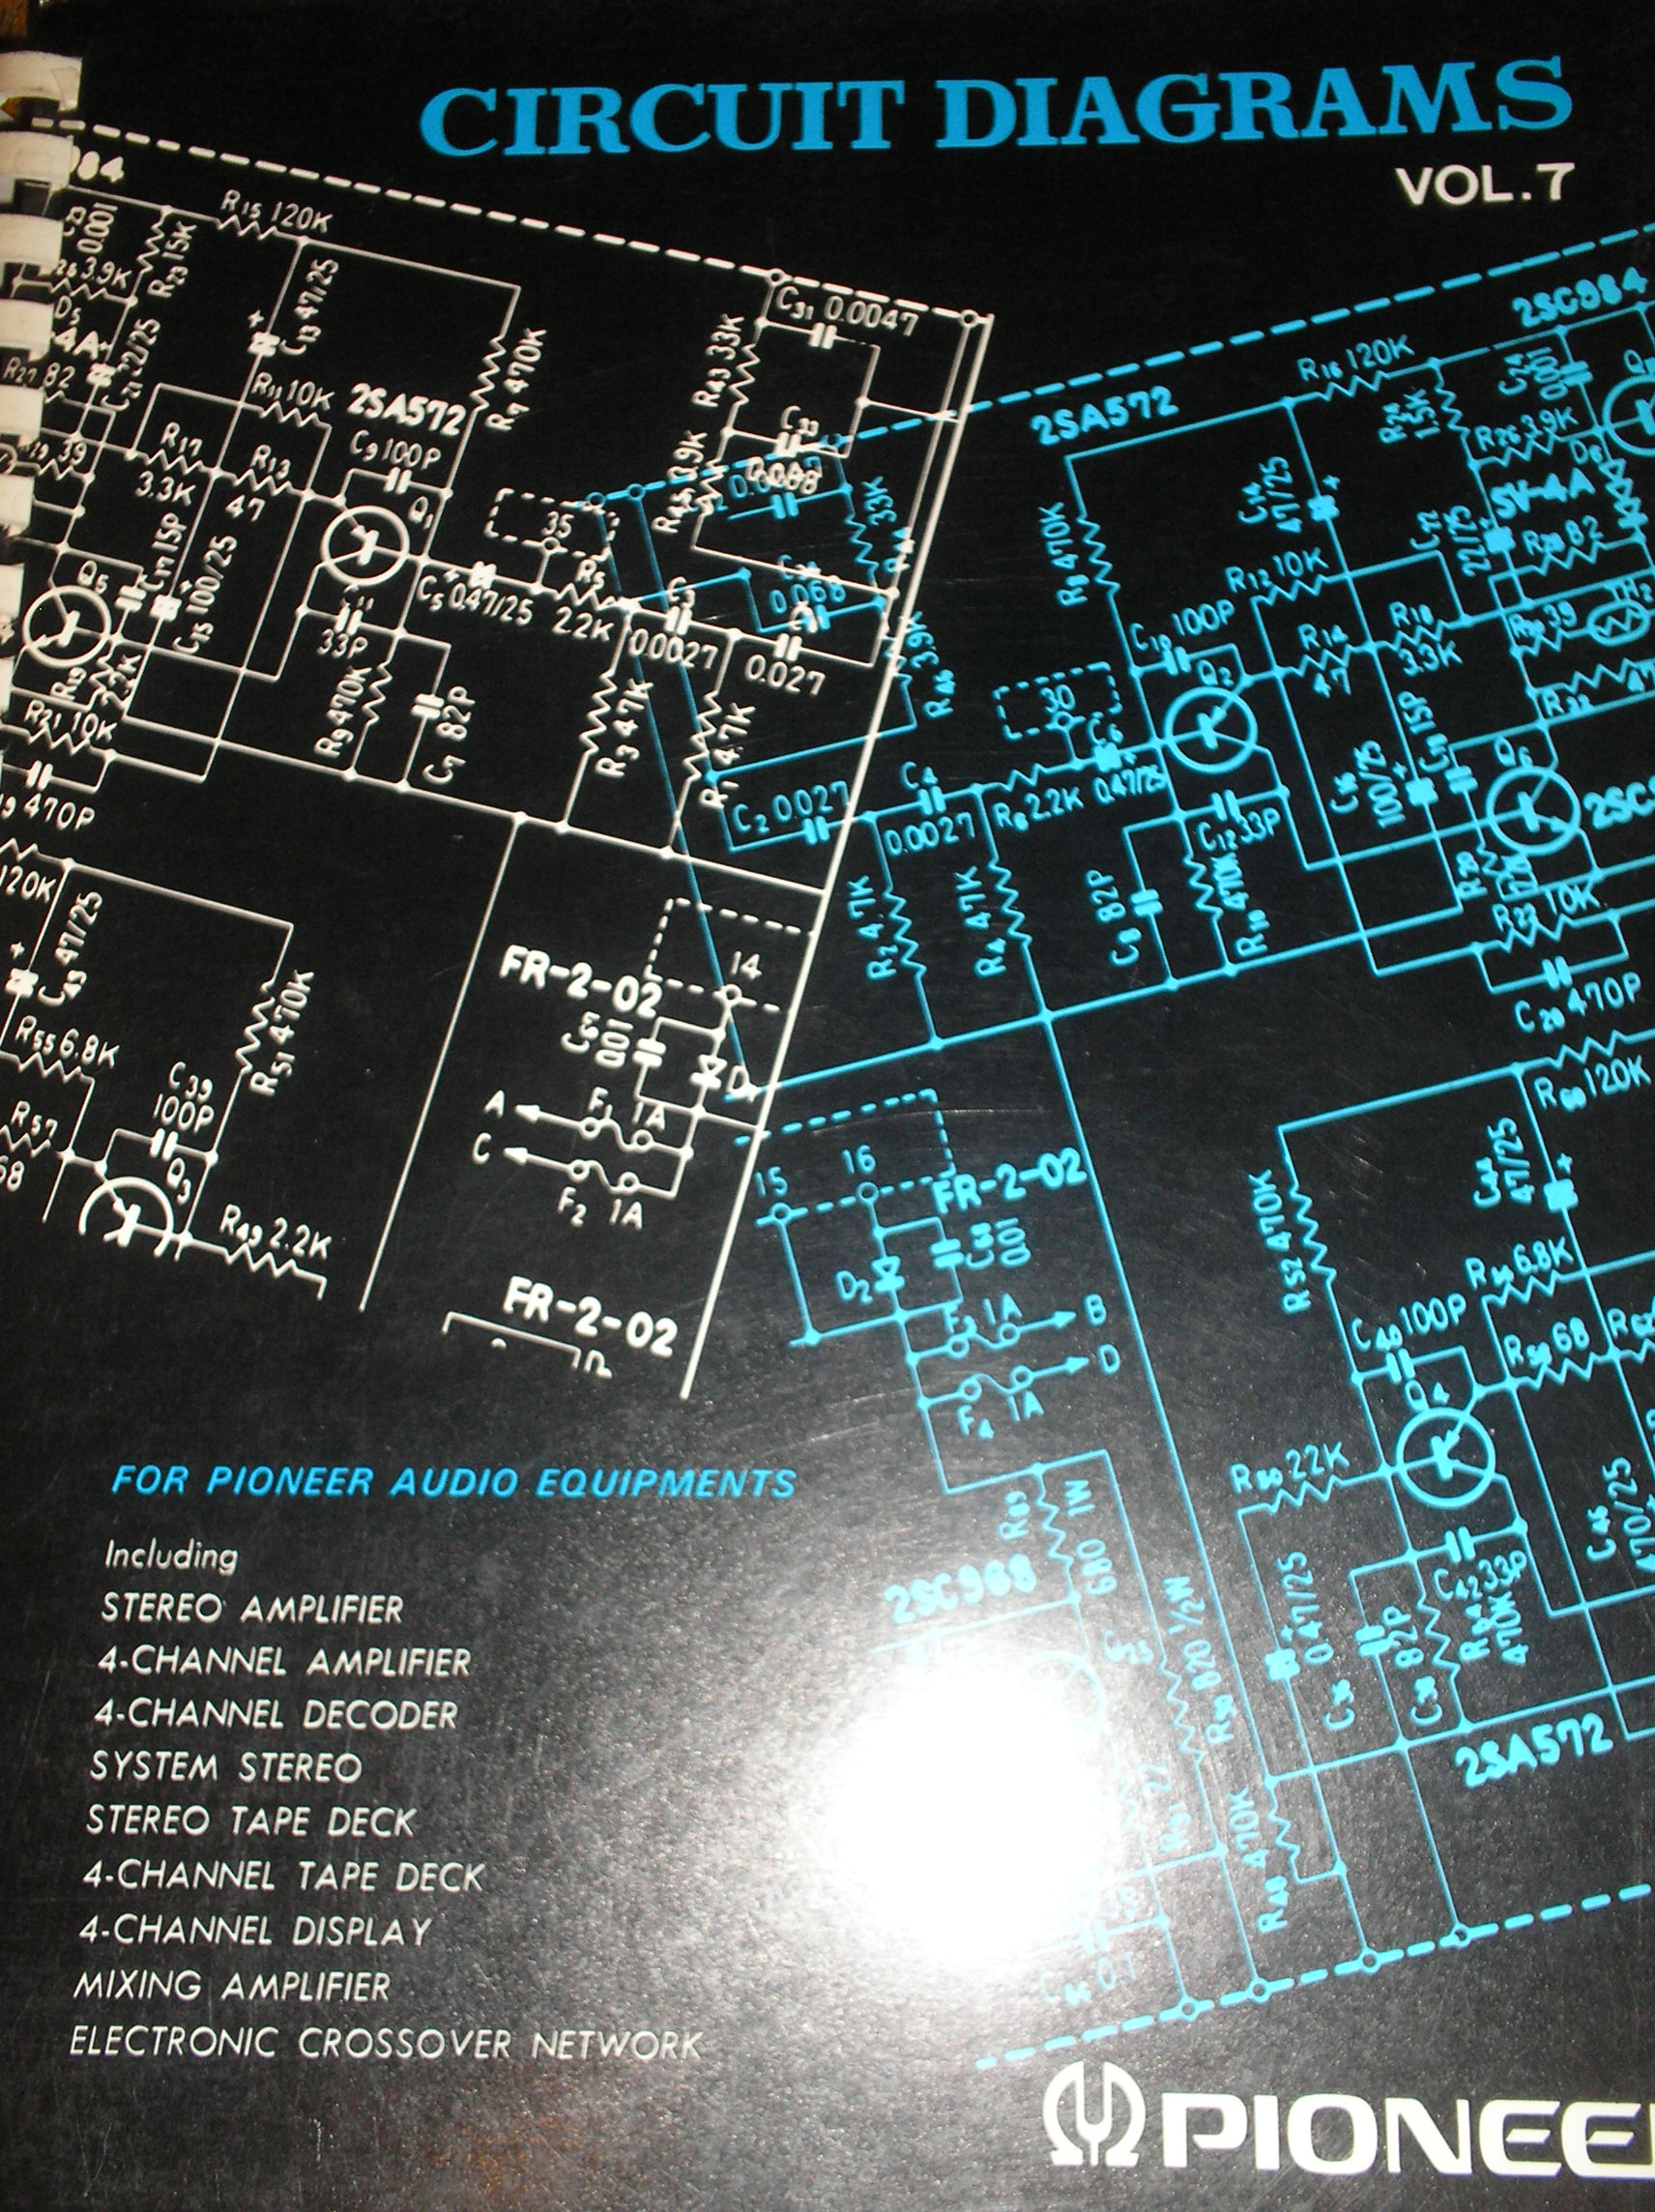 QD210 4 Channel Decoder fold out schematics.   Book 7